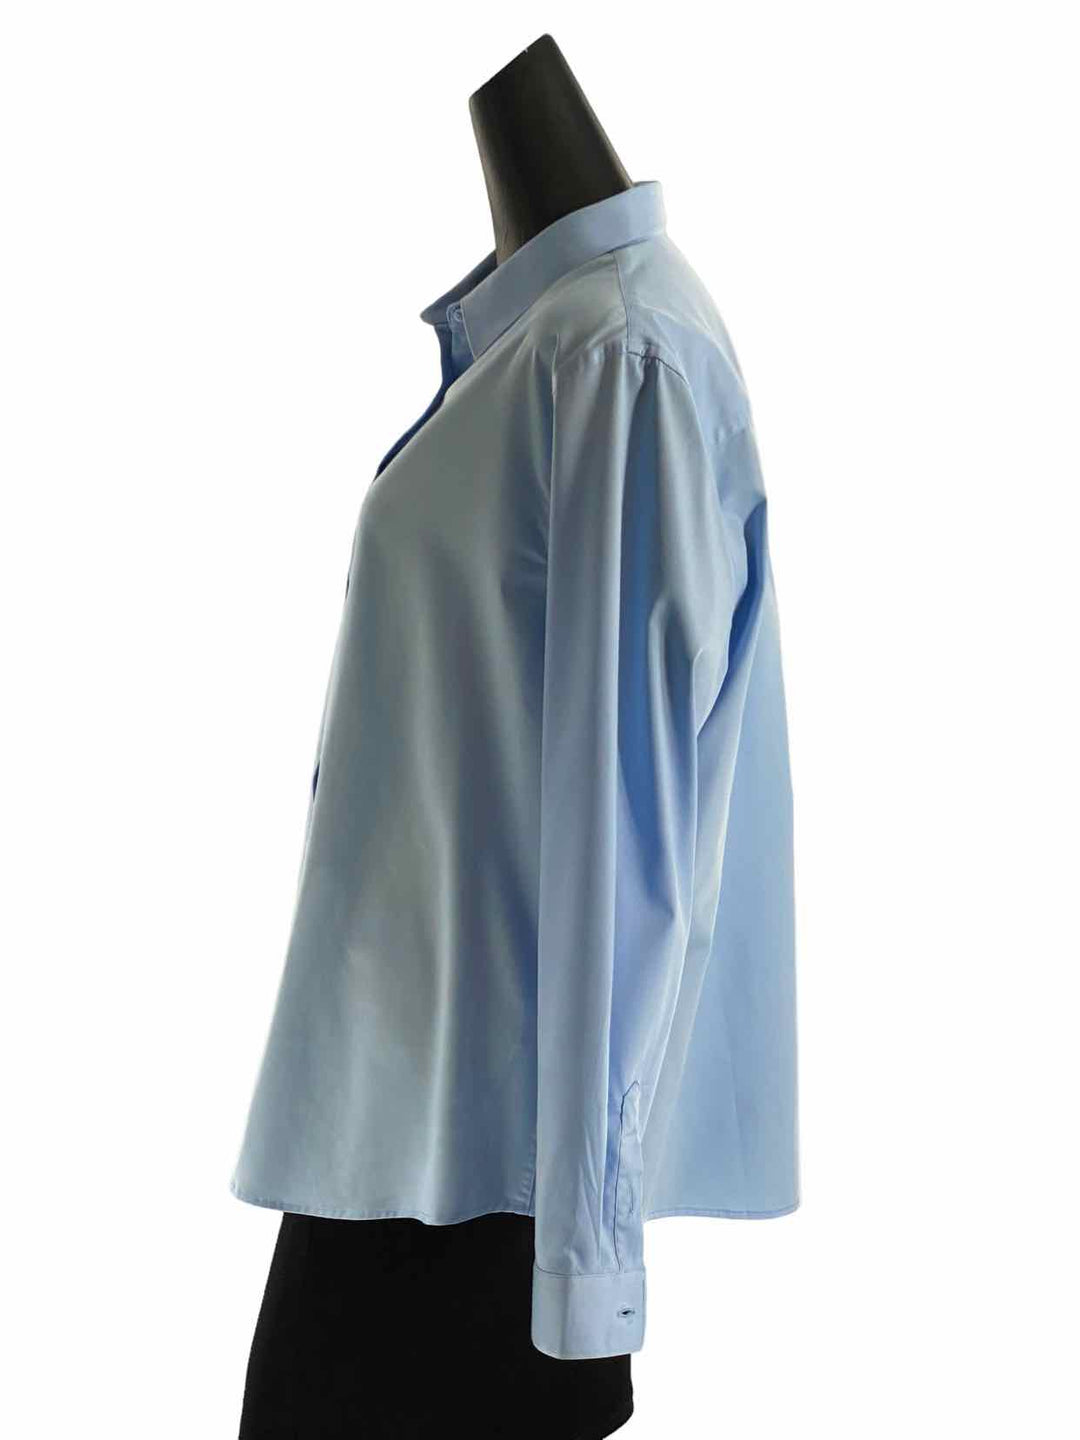 Tolovic Size XL Pale Blue Long Sleeve Shirts